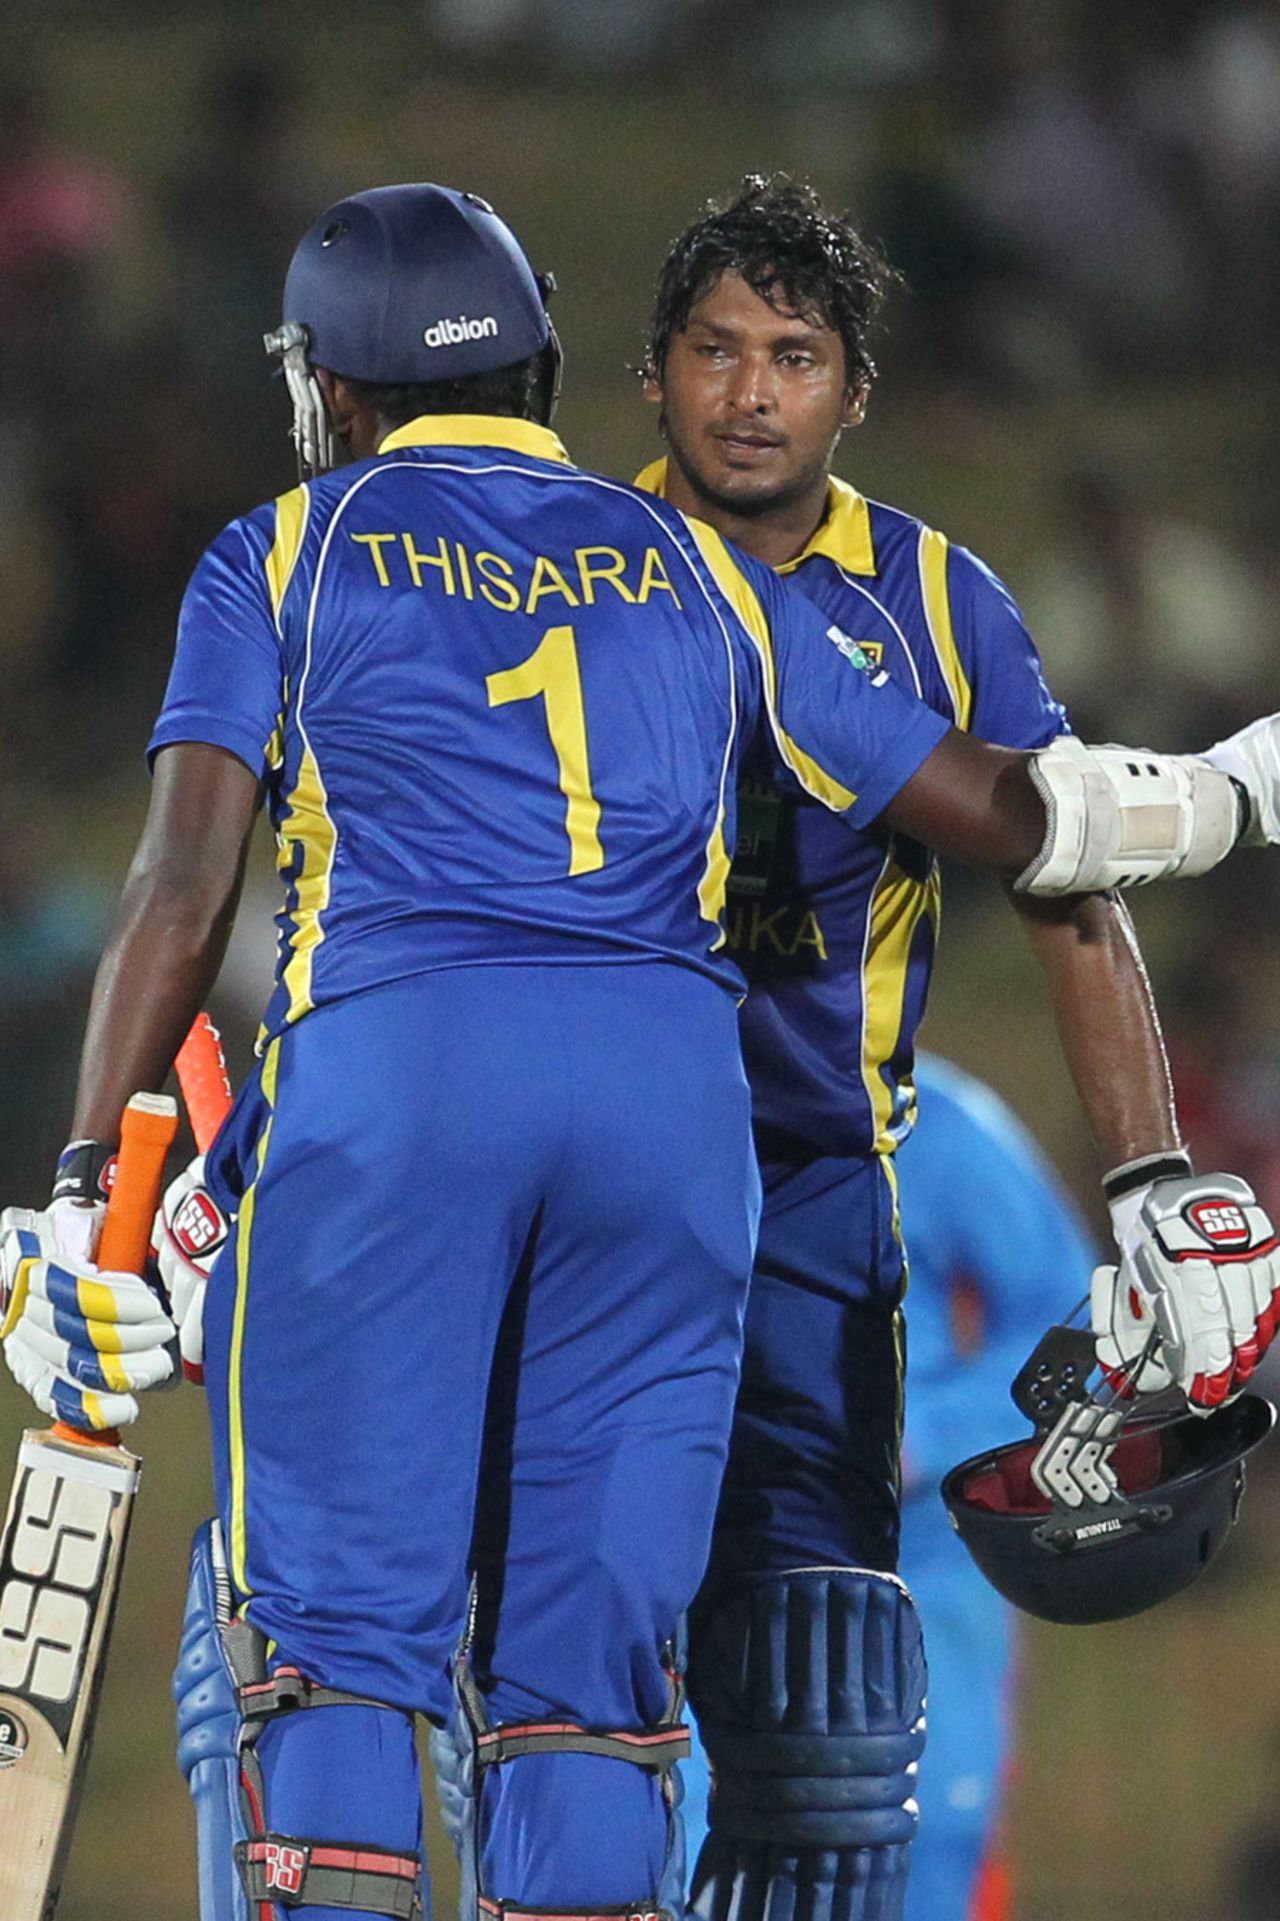 Kumar Sangakkara is congratulated by Thisara Perera after reaching his century, Sri Lanka v India, 1st ODI, Hambantota, July 21, 2012